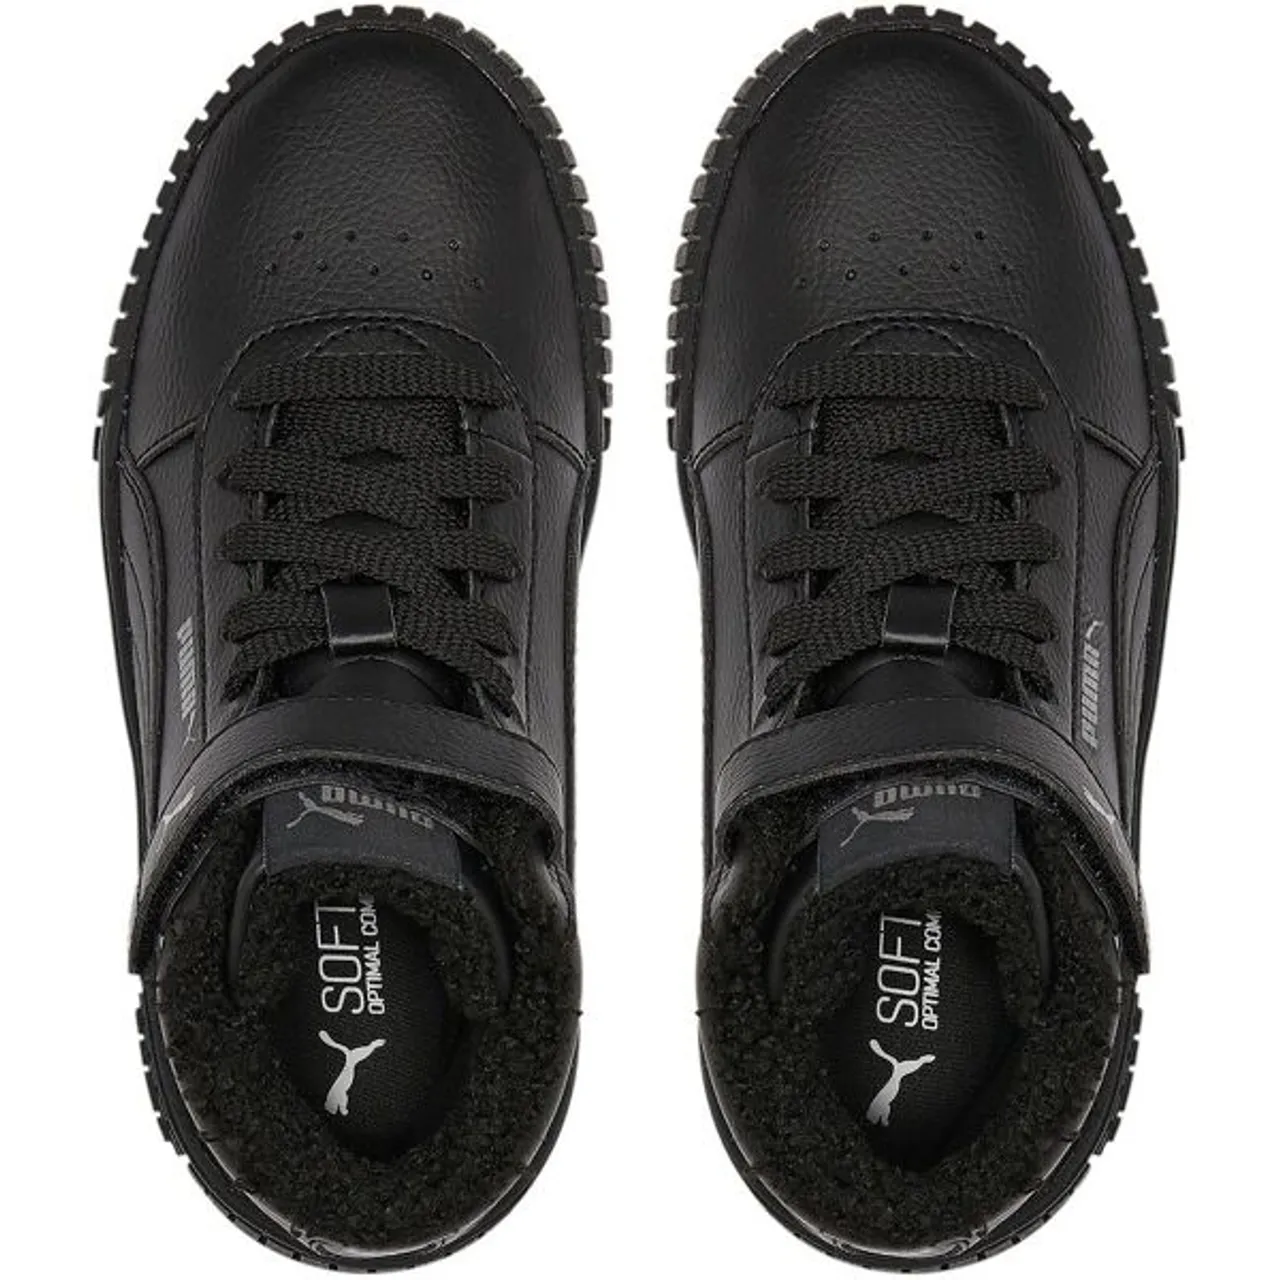 Sneaker PUMA "CARINA 2.0 MID WTR PS" Gr. 28, schwarz (puma black, puma dark shadow) Kinder Schuhe Sneaker